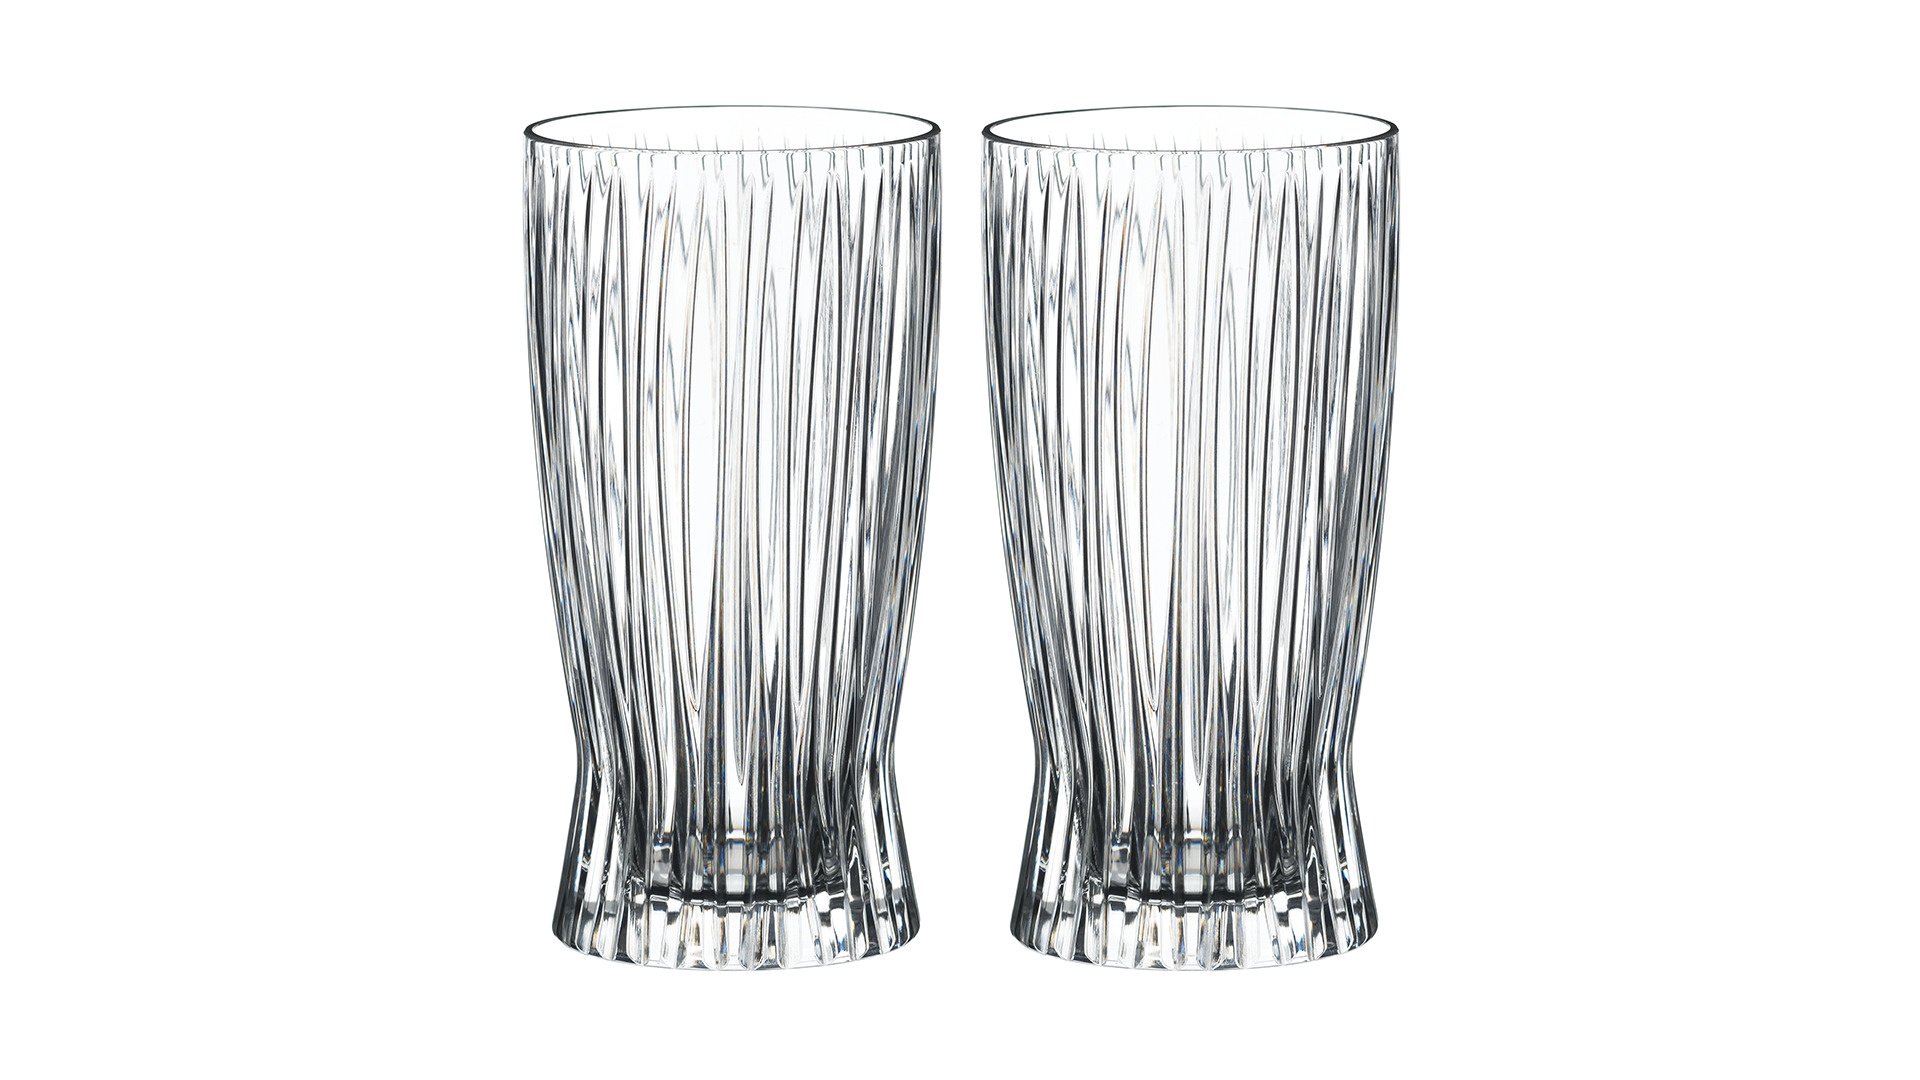 Набор стаканов для коктейля Riedel Tumbler Collection Fire Longdrink 375 мл, 2шт, стекло хрустальное